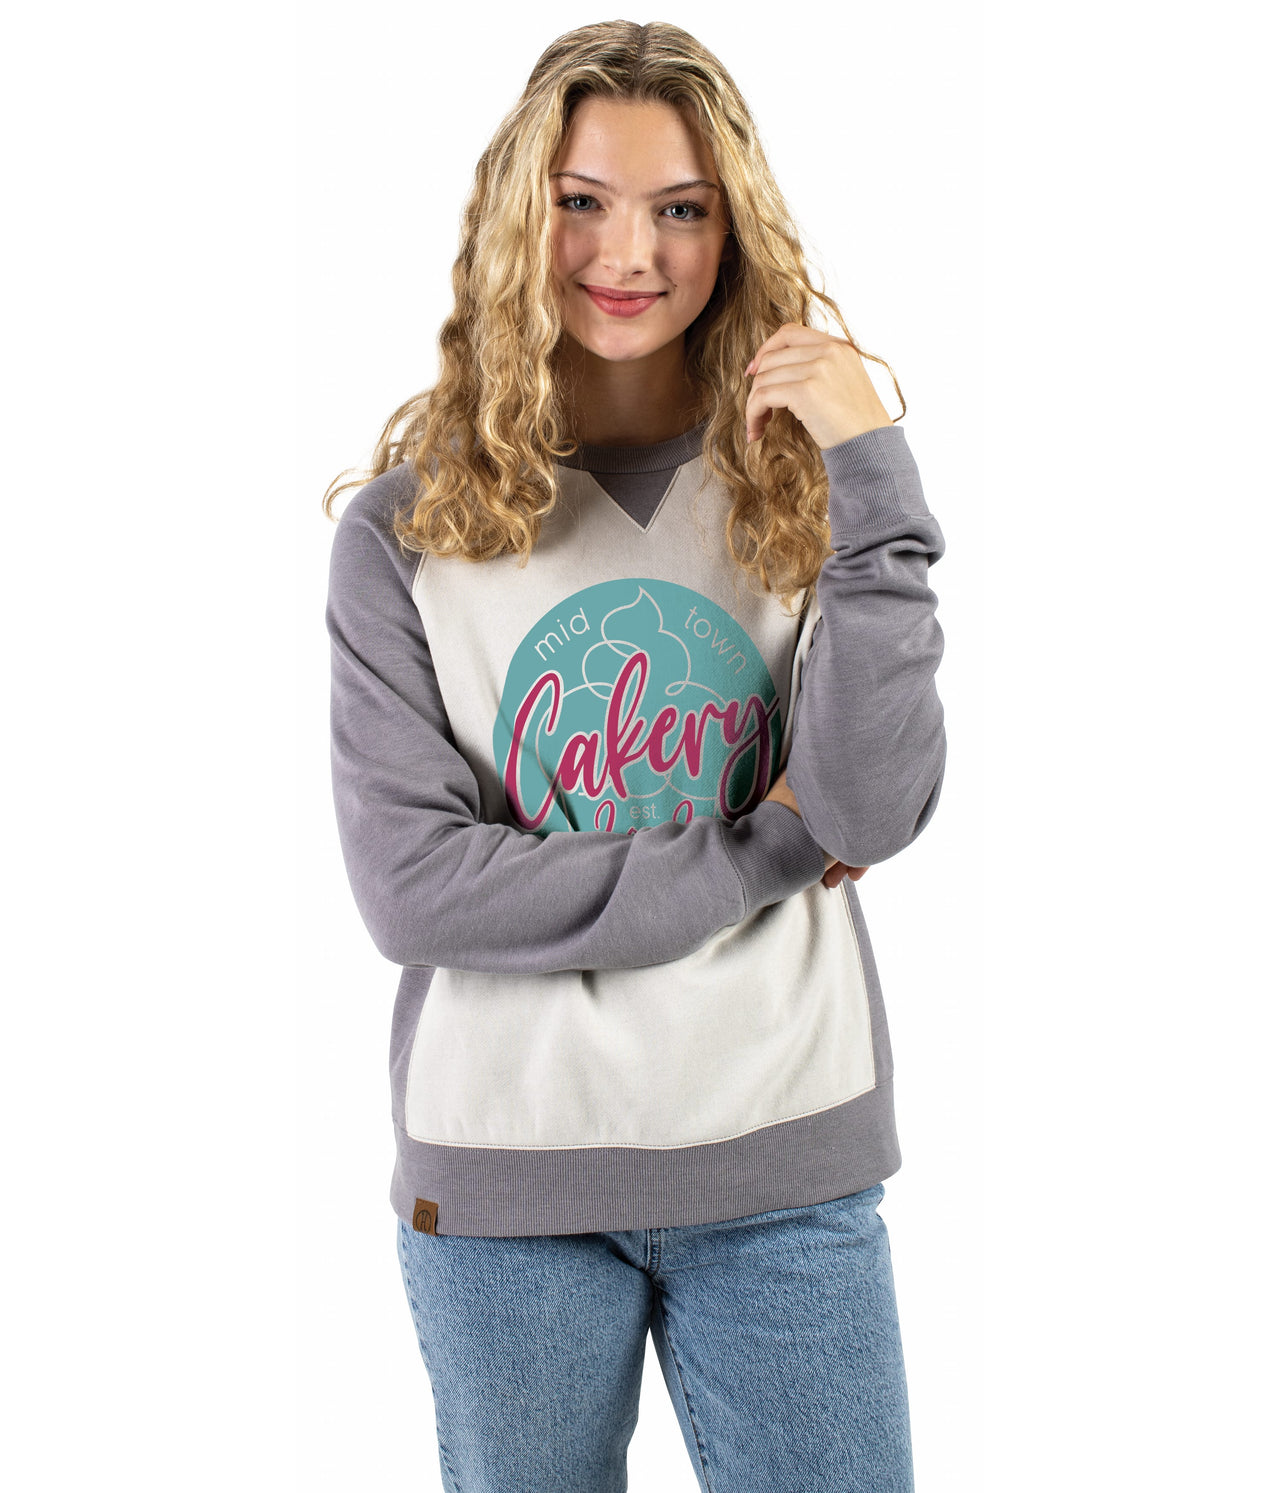 Ladies - Fleece Crewneck Sweatshirt (Fusion Elite)